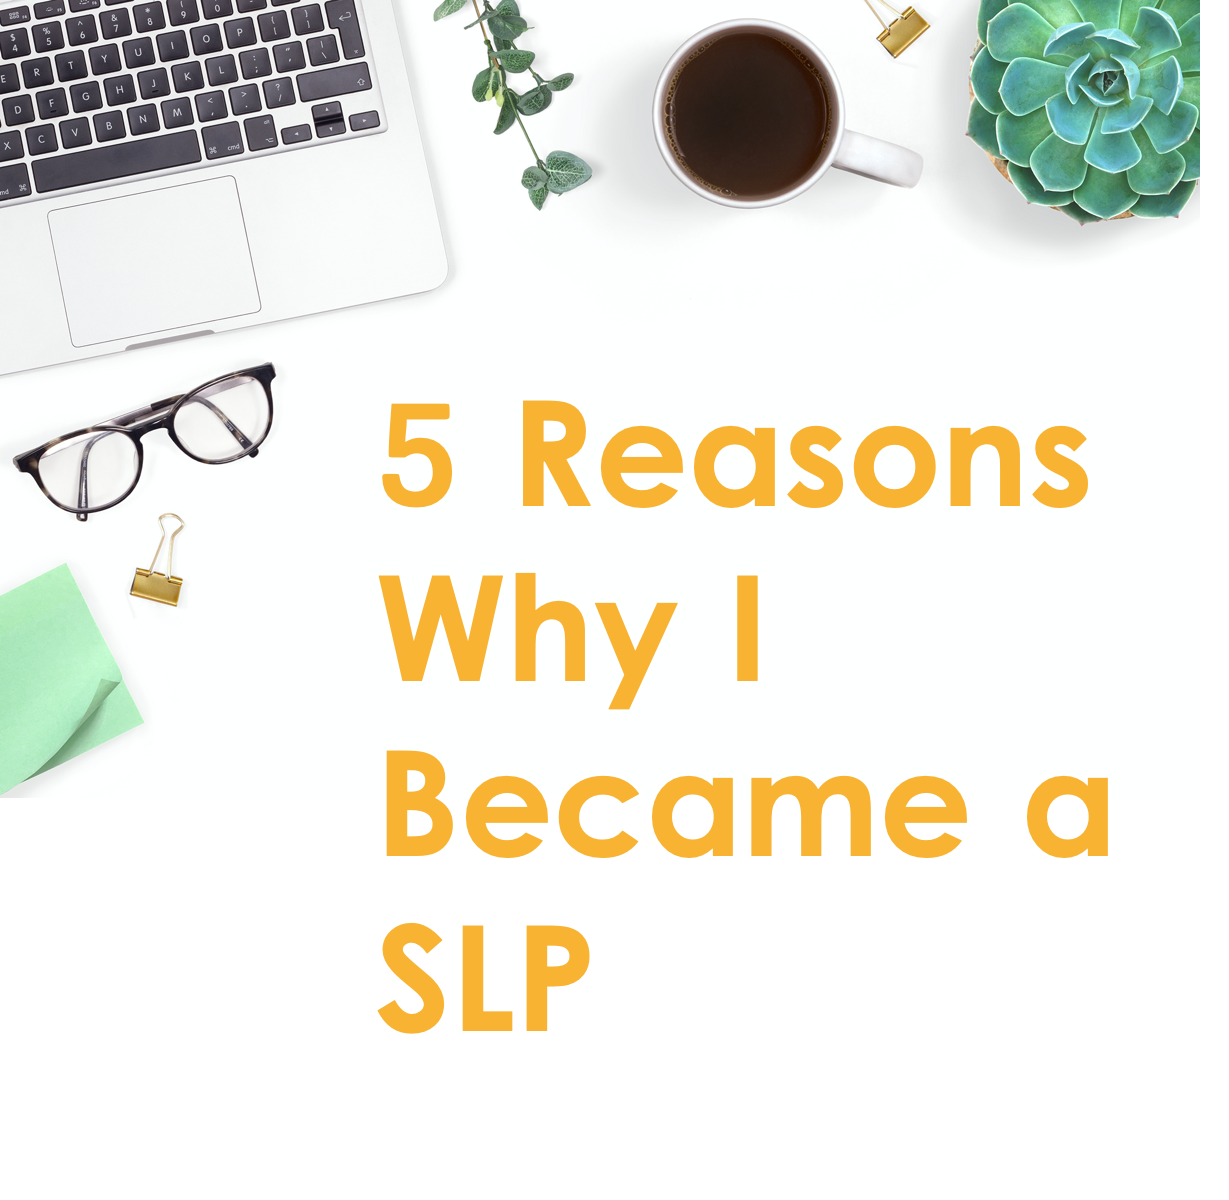 5 Reasons Why I Became a SLP